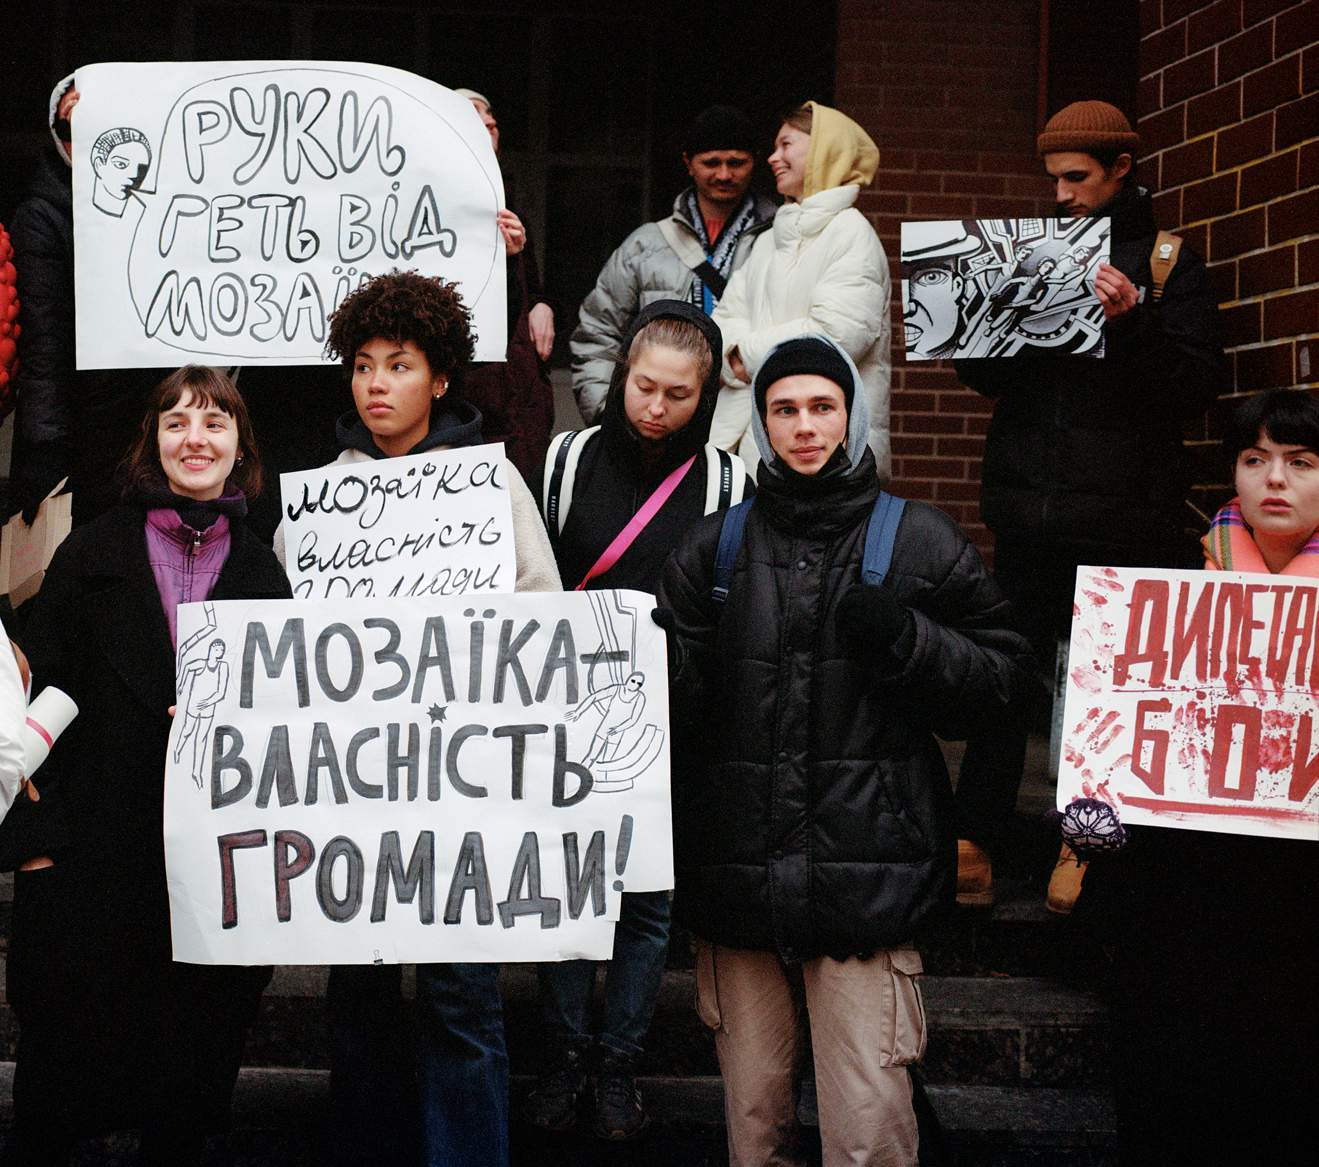 ukrainian_modernism_members_peaceful_protest_against_ruining_mosaics_crop02.jpg